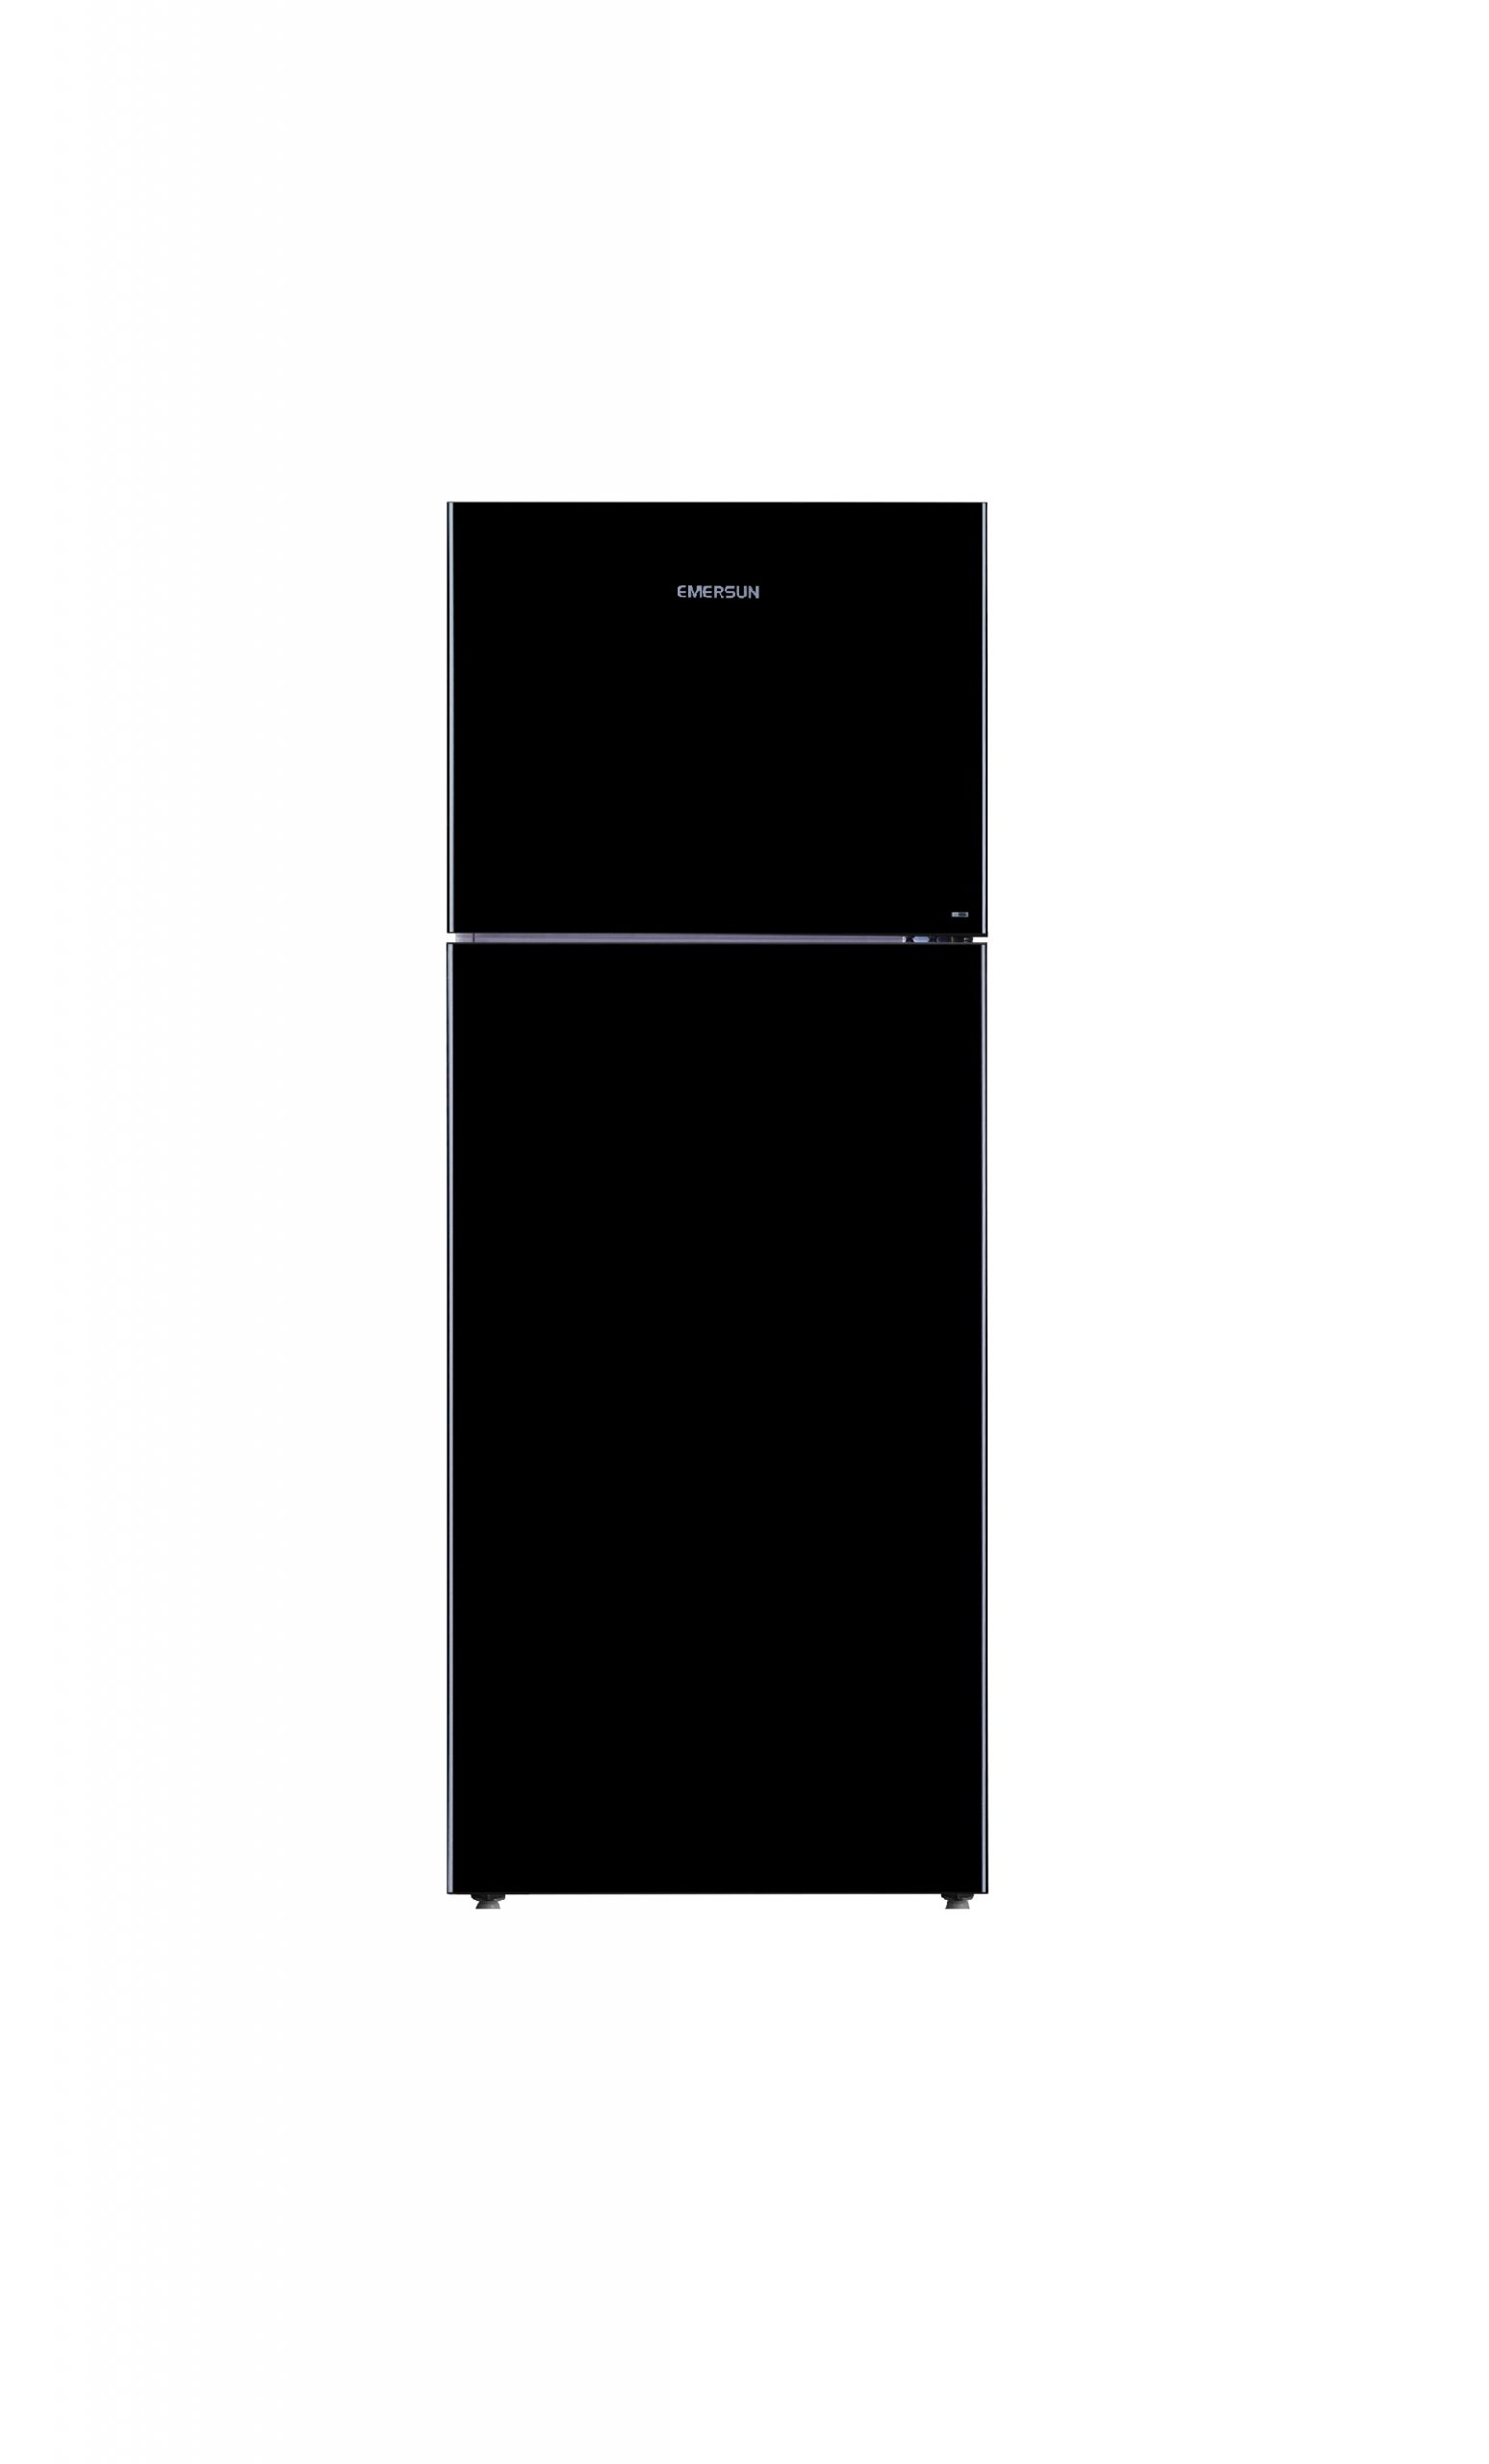 Emerson 17-foot refrigerator freezer model TFH17 / EL